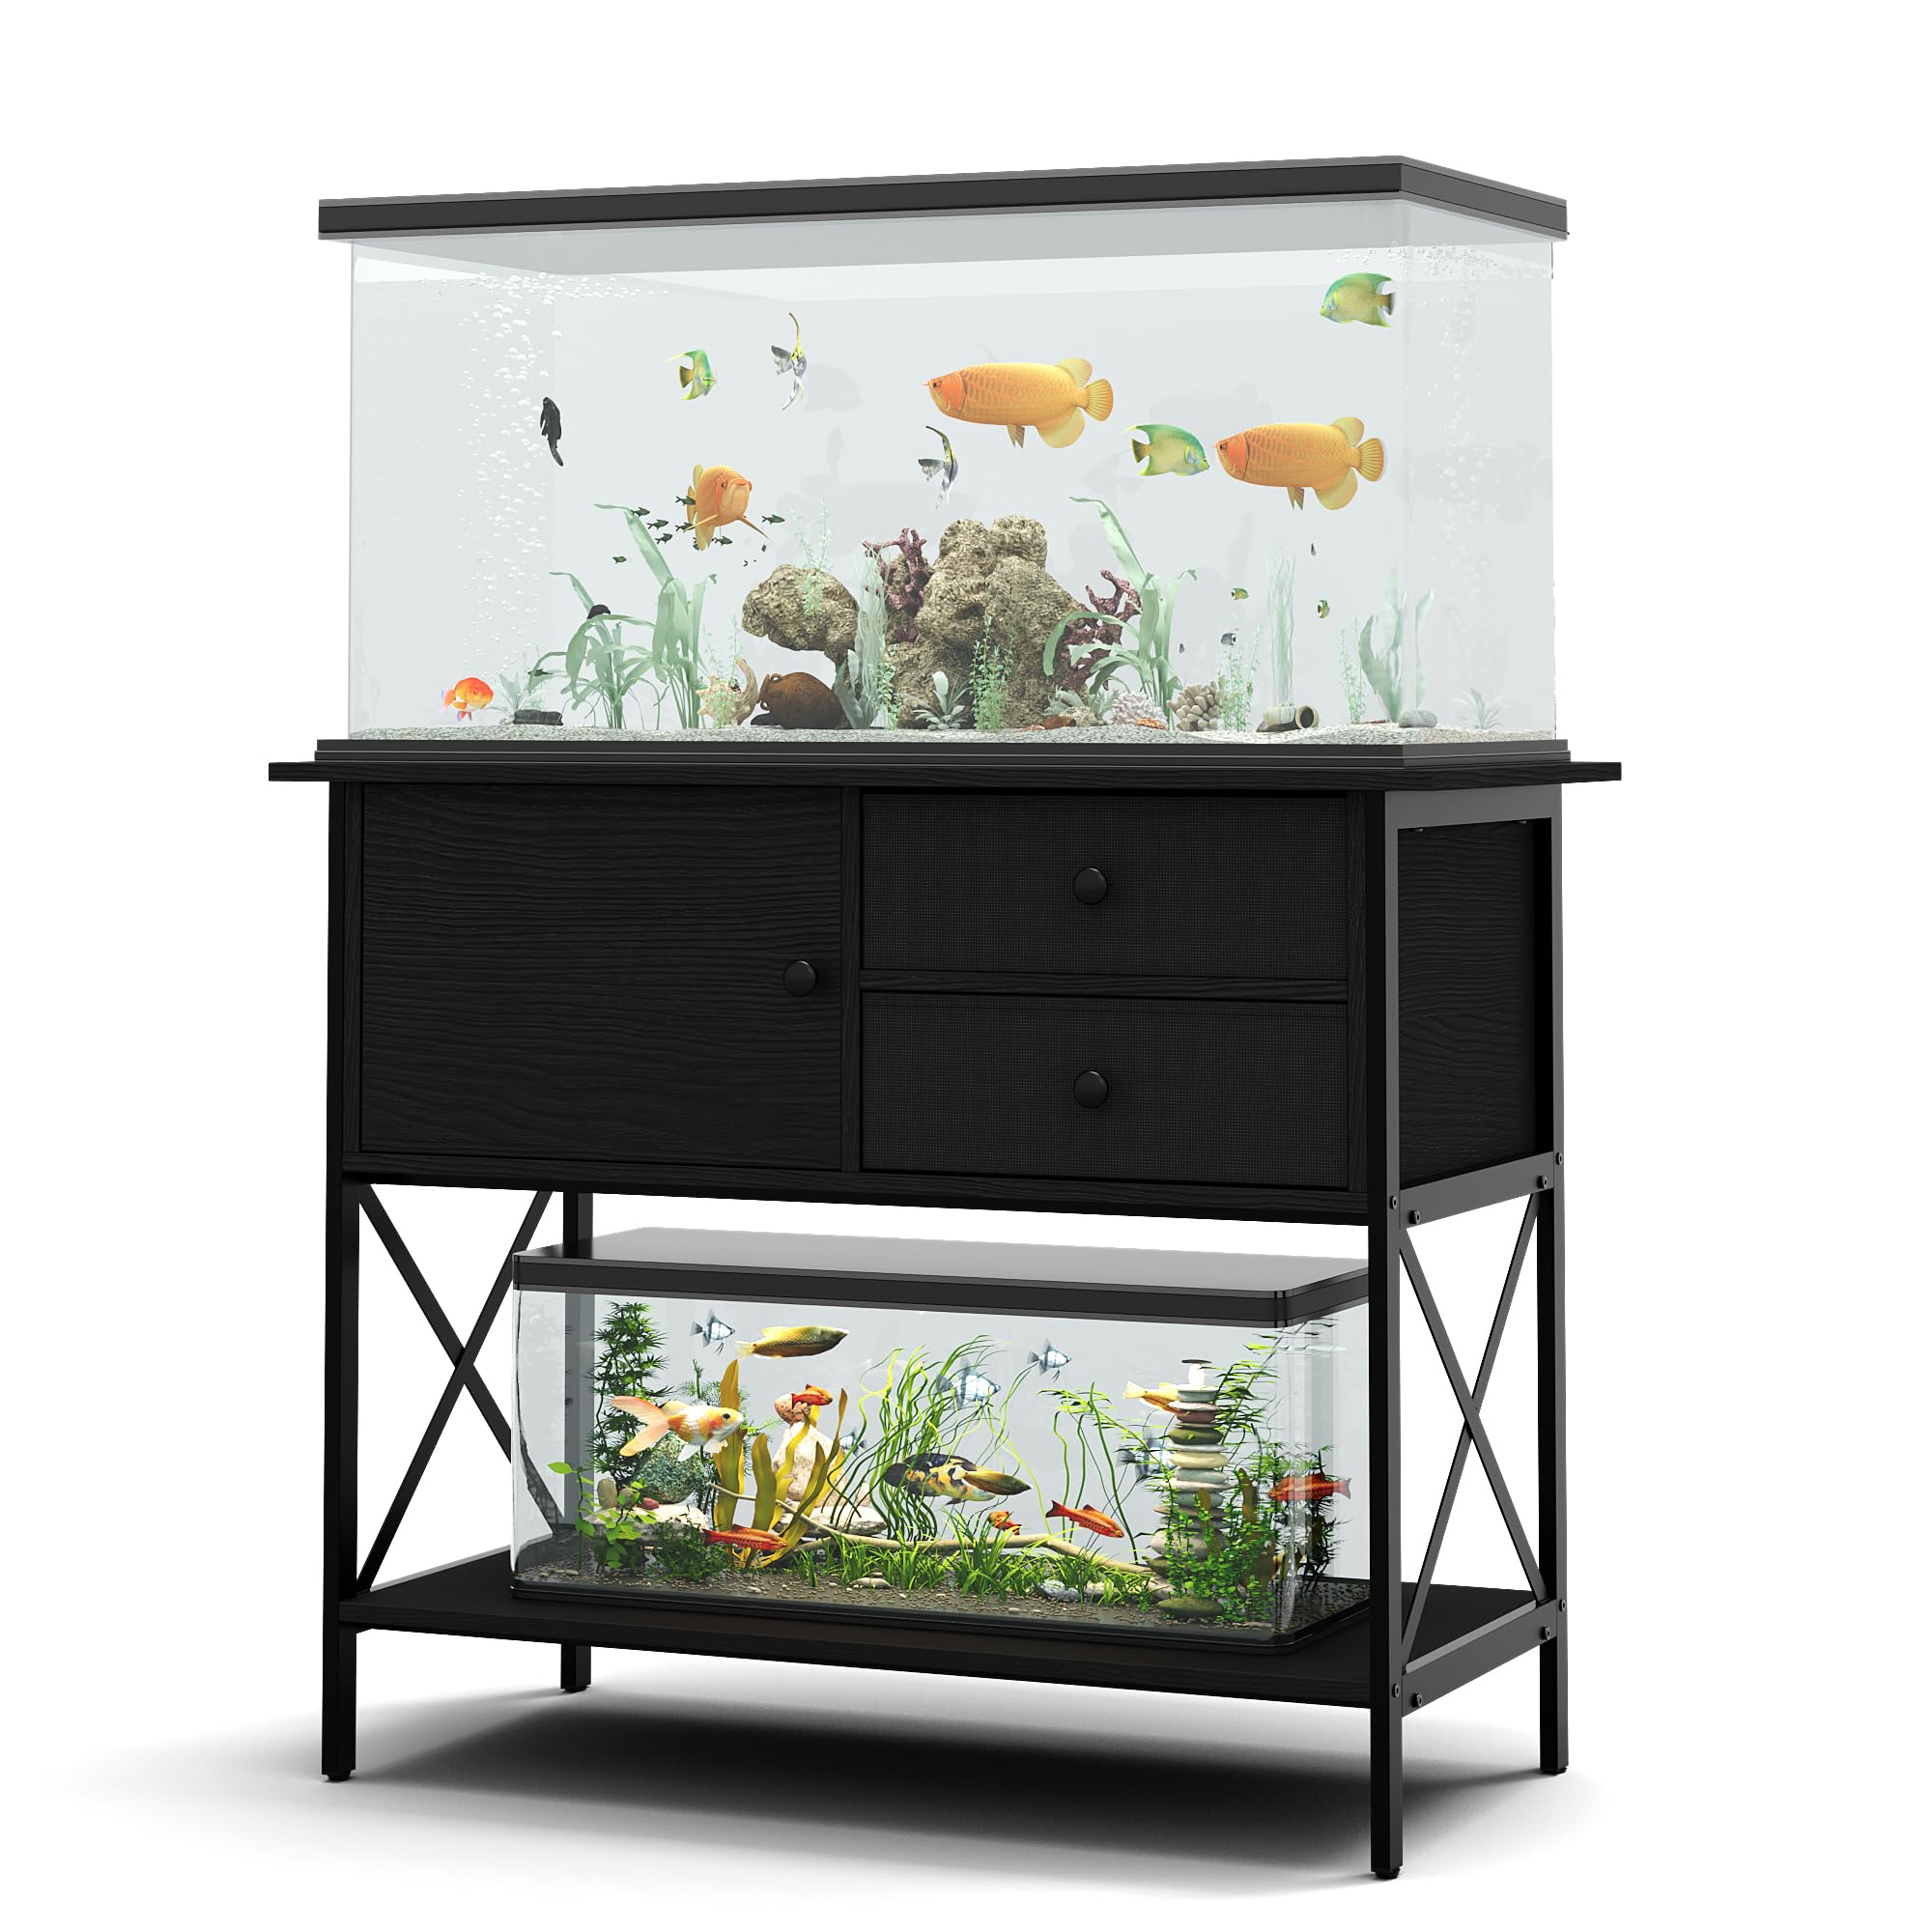 FILKO Aquarium Stand: Metal 29 Gallon Fish Tank Stand